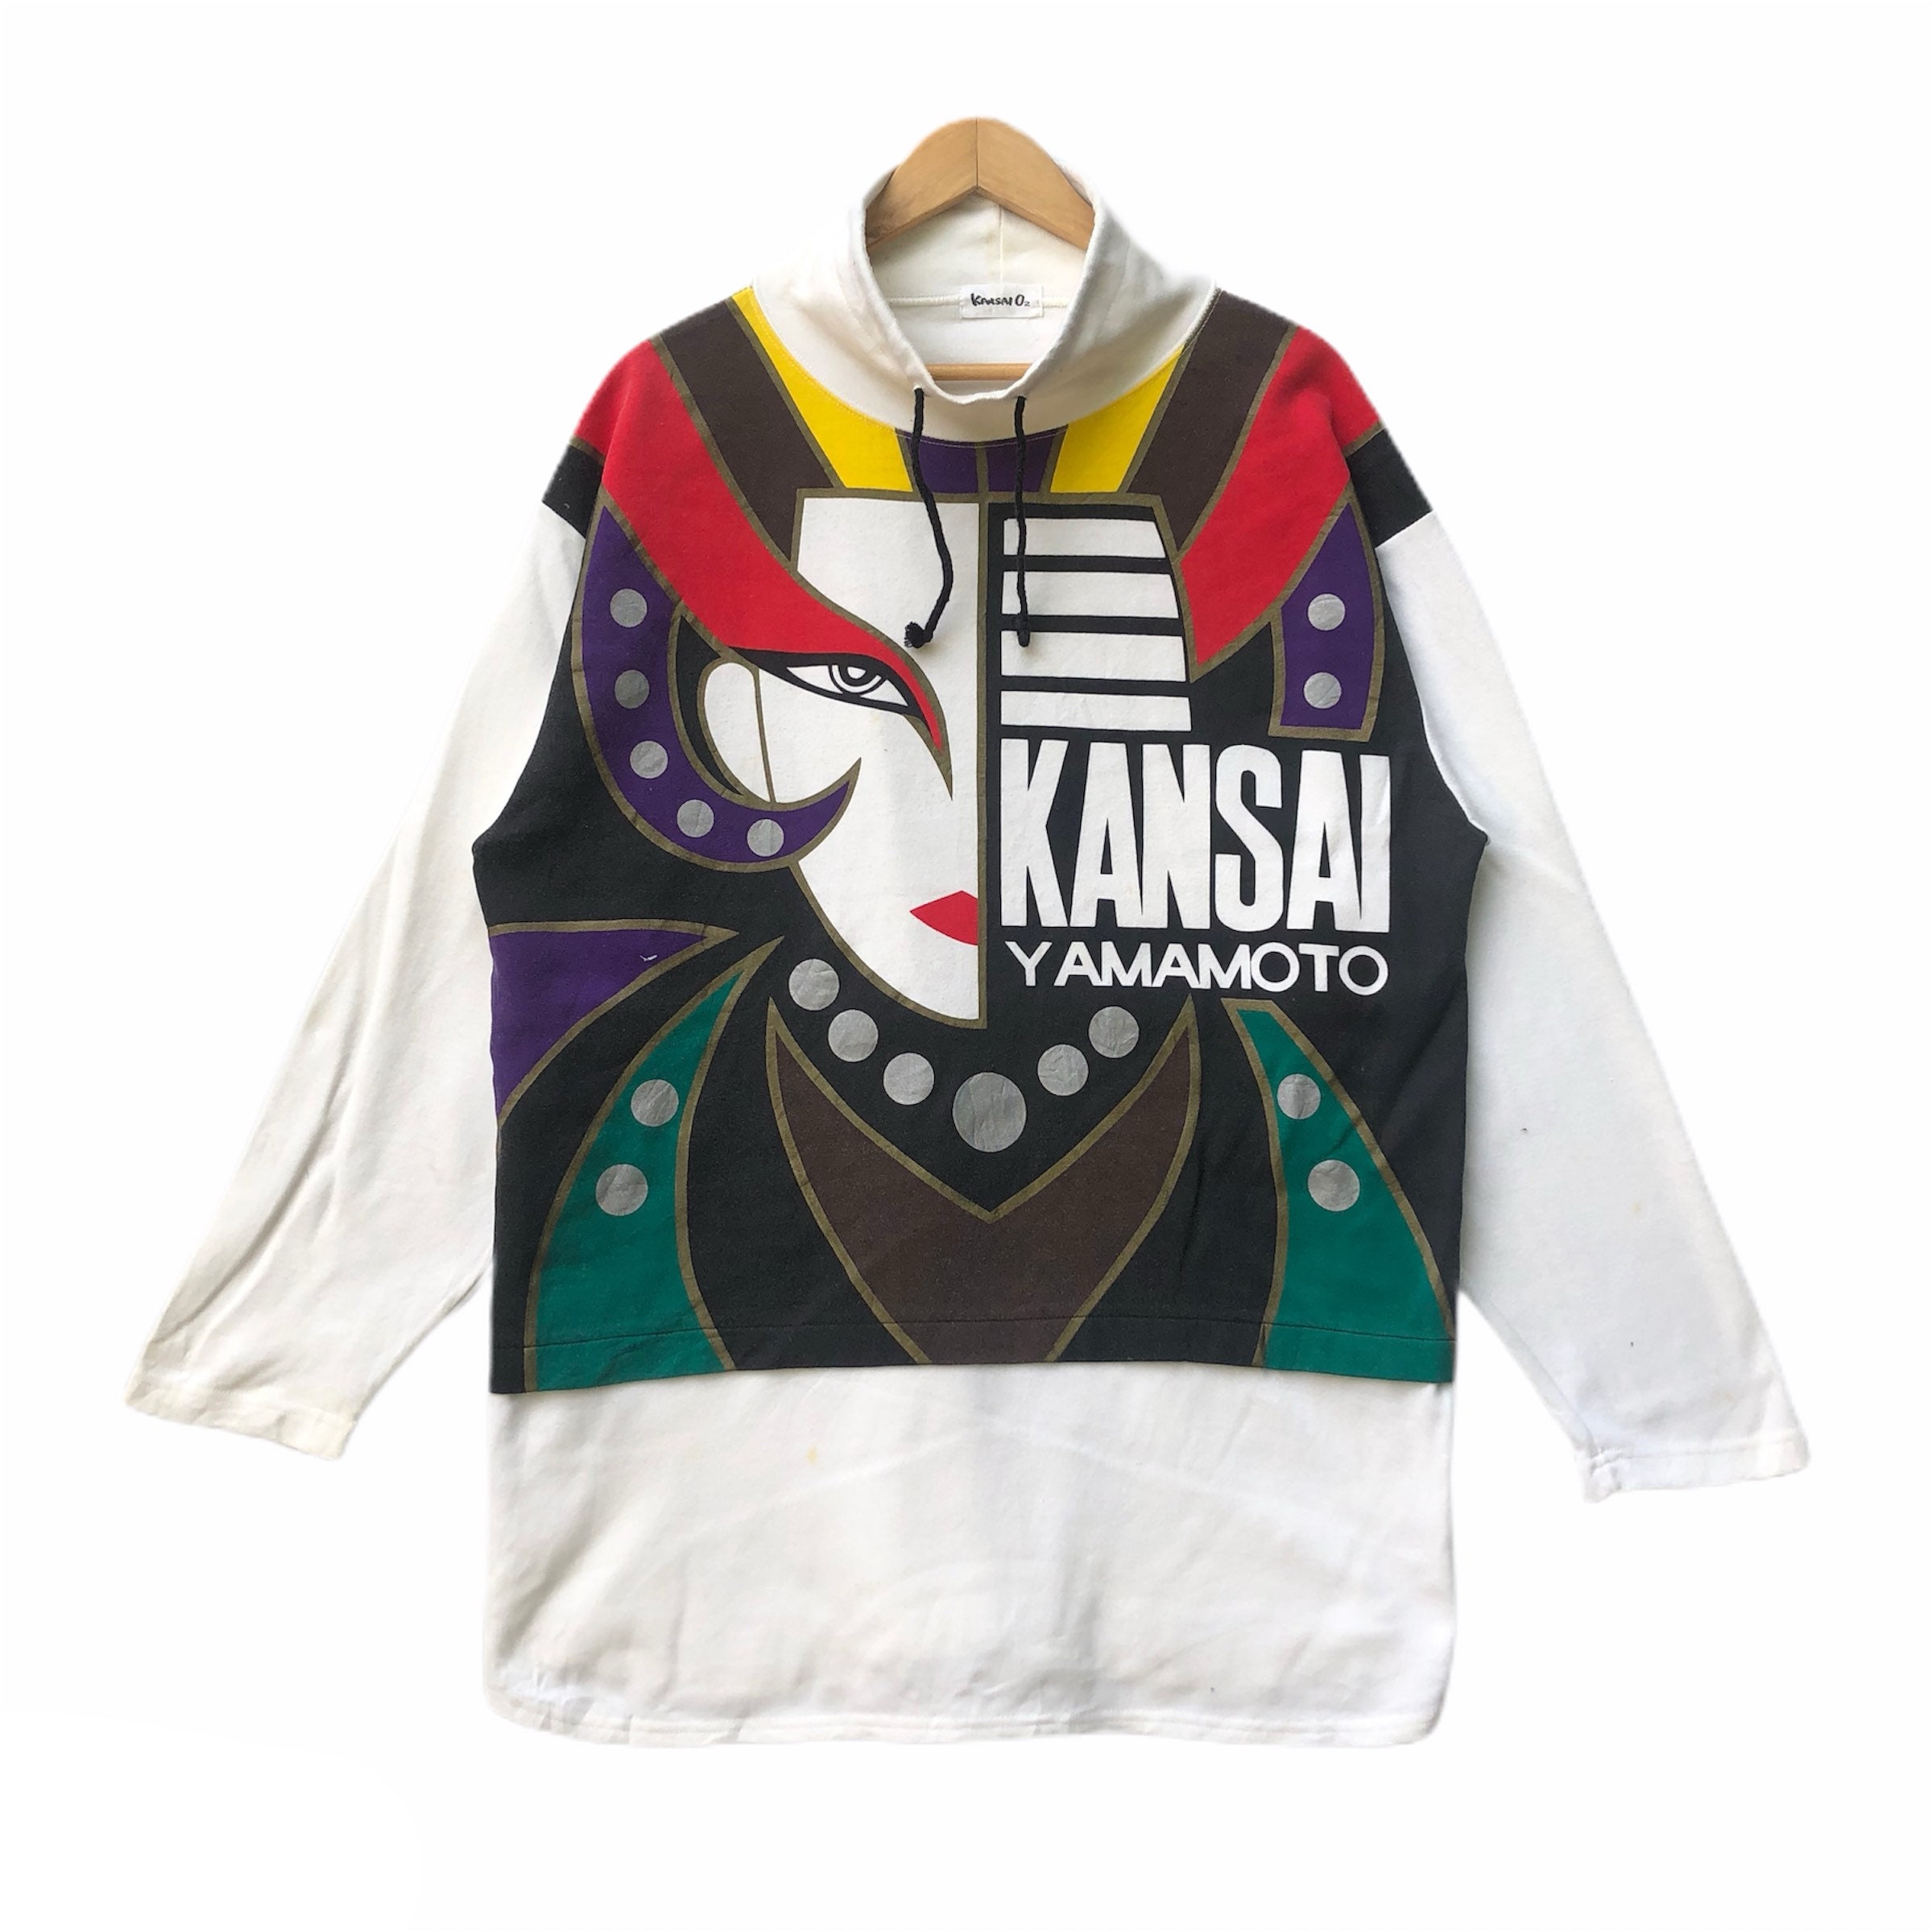 kansai yamamoto clothing